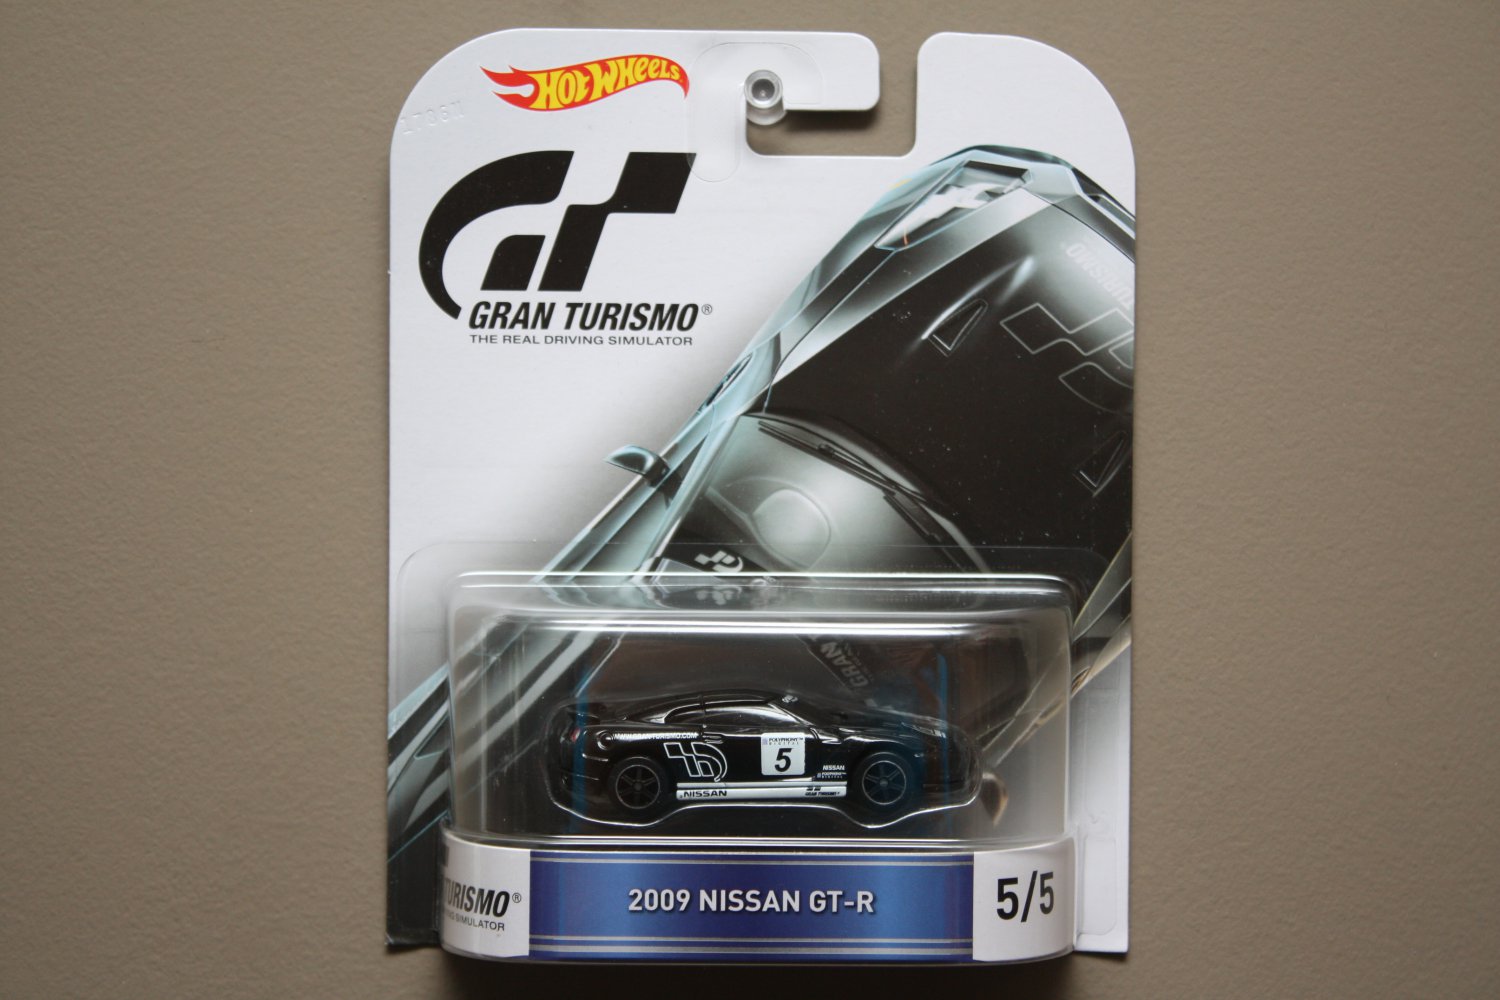 Hot Wheels Gran Turismo 2009 Nissan GT-R 